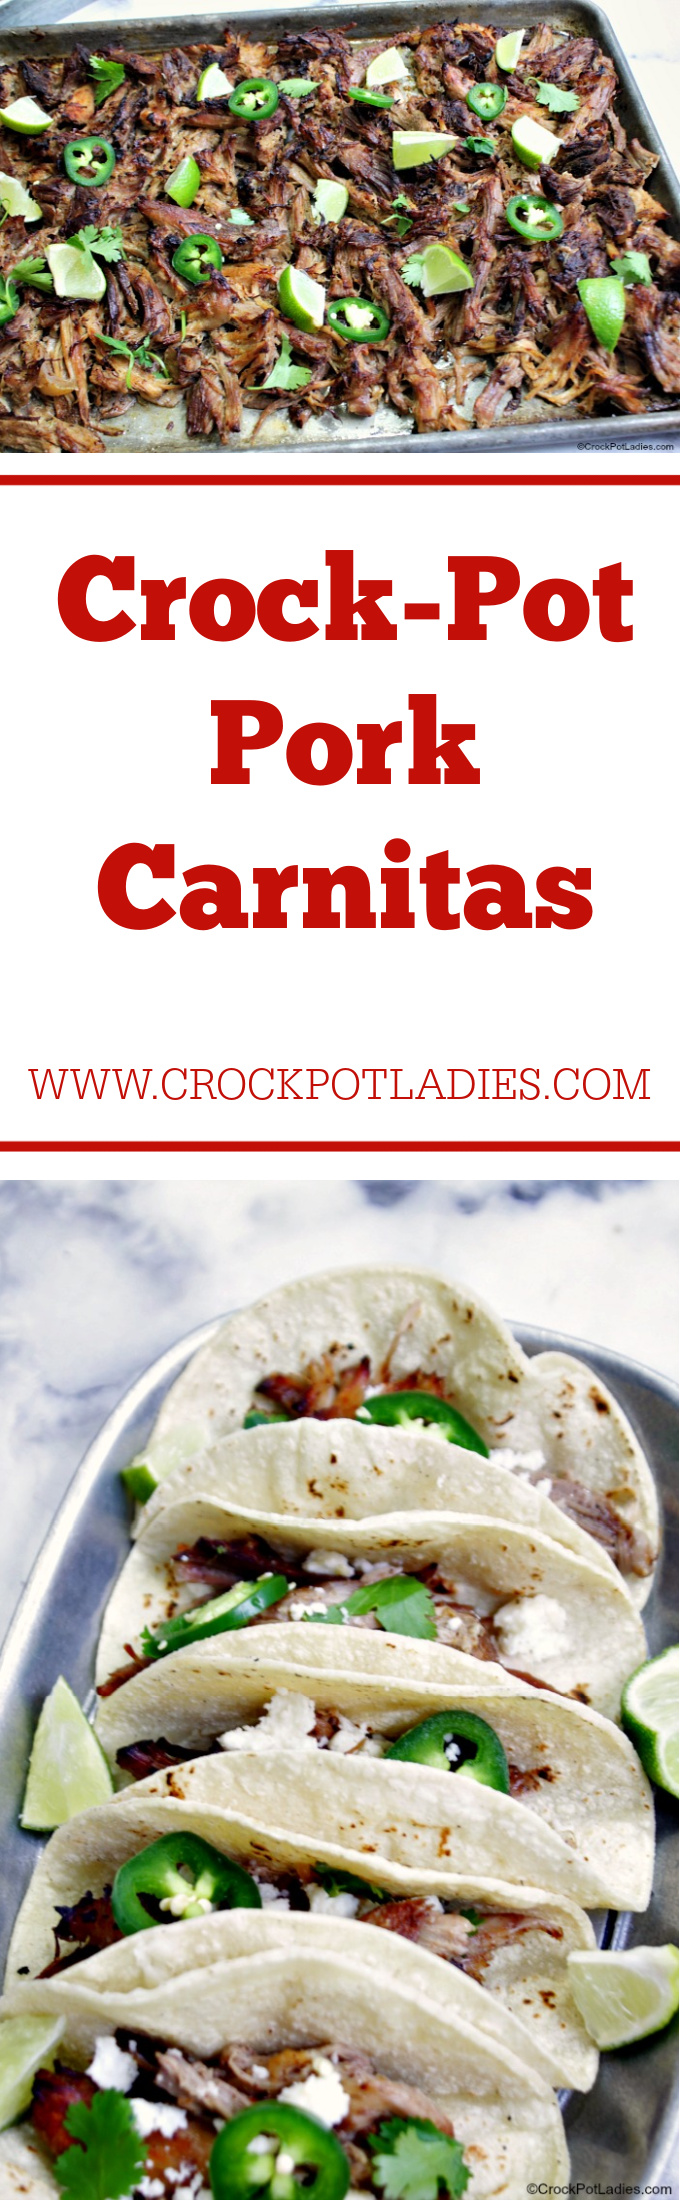 Crock-Pot Pork Carnitas (Mexican Shredded Pork)